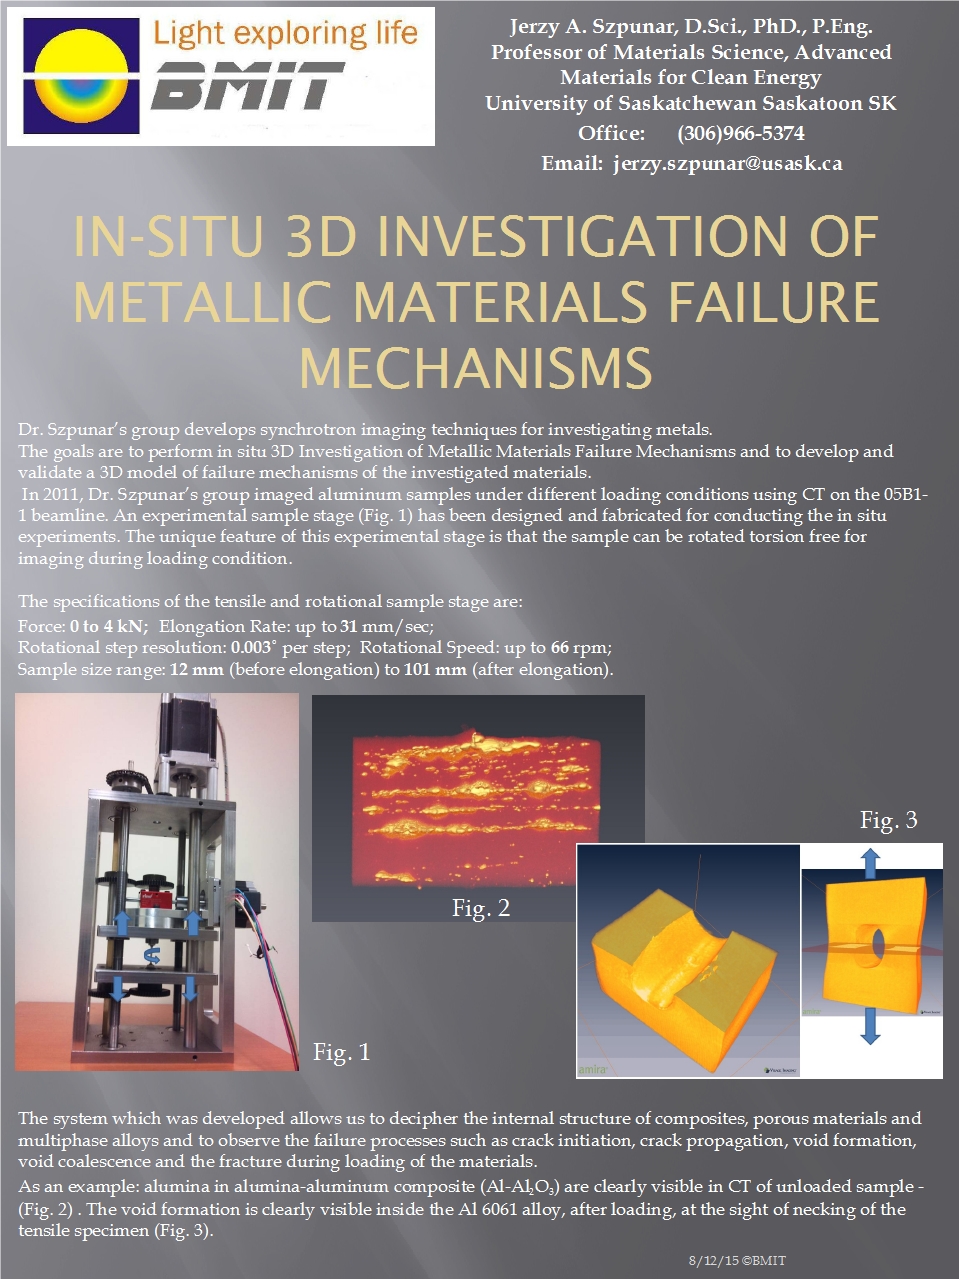 In-situ 3D Investigation of Metallic Materials’ Failure Mechanisms Image